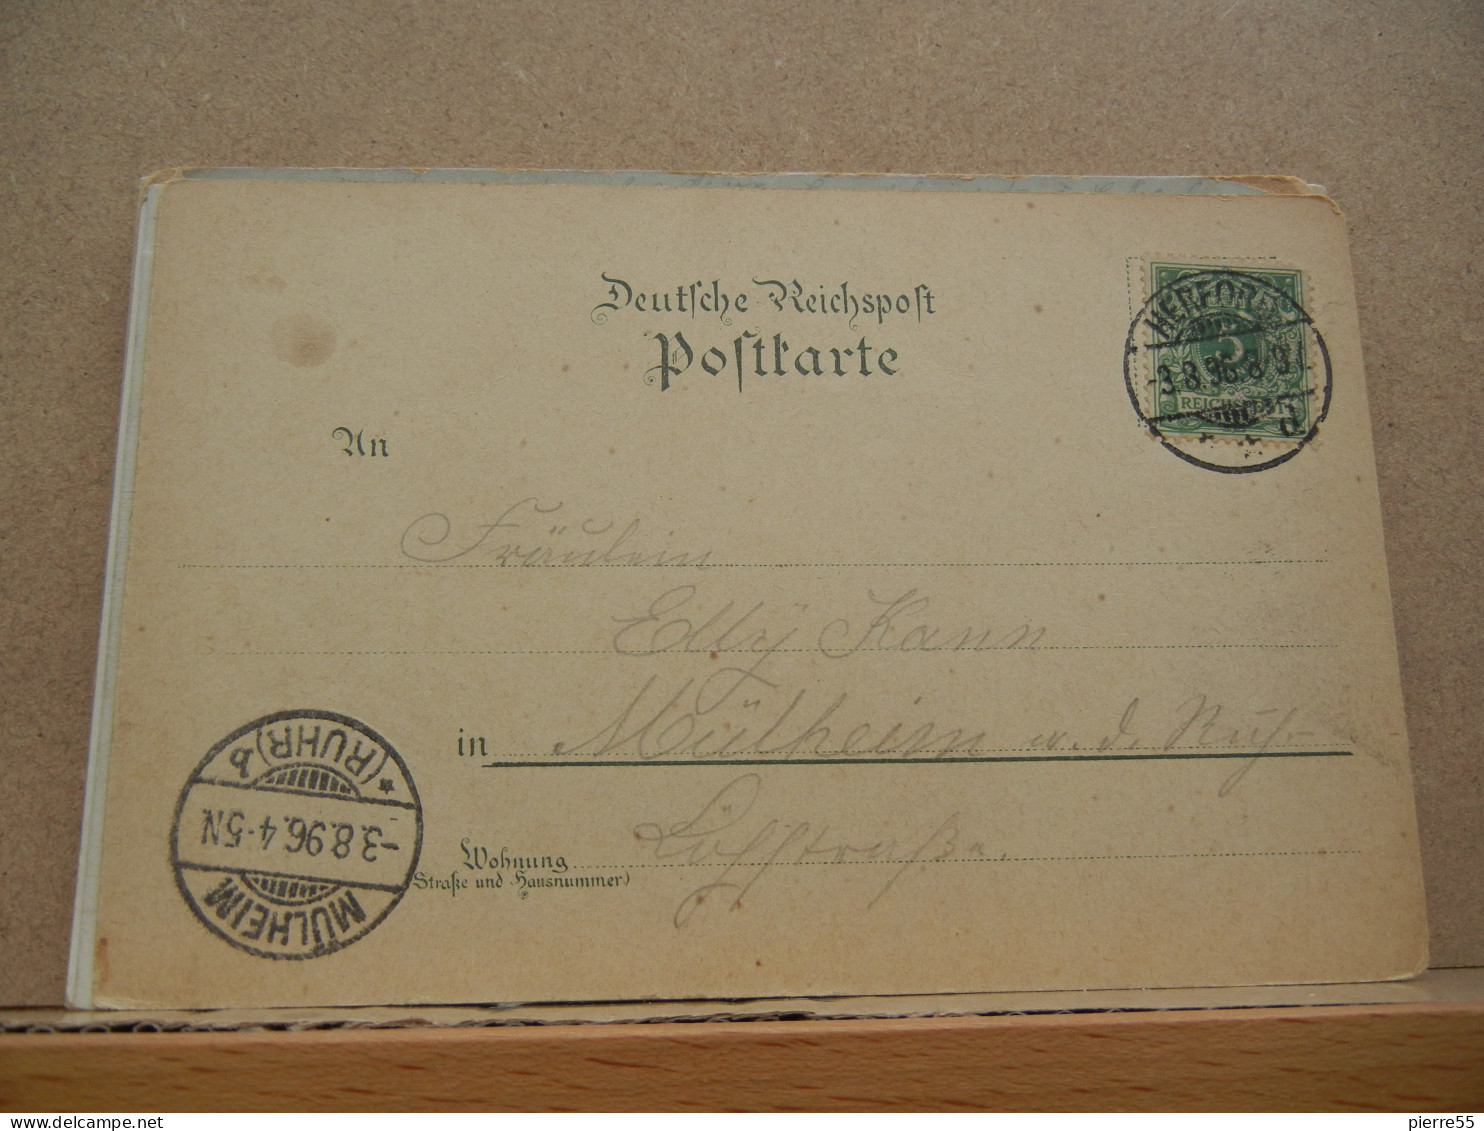 GRUSS Aus HERFORD - Postmark Double Rond 1896 - Mülheim & Herford - Good Condition - Herford